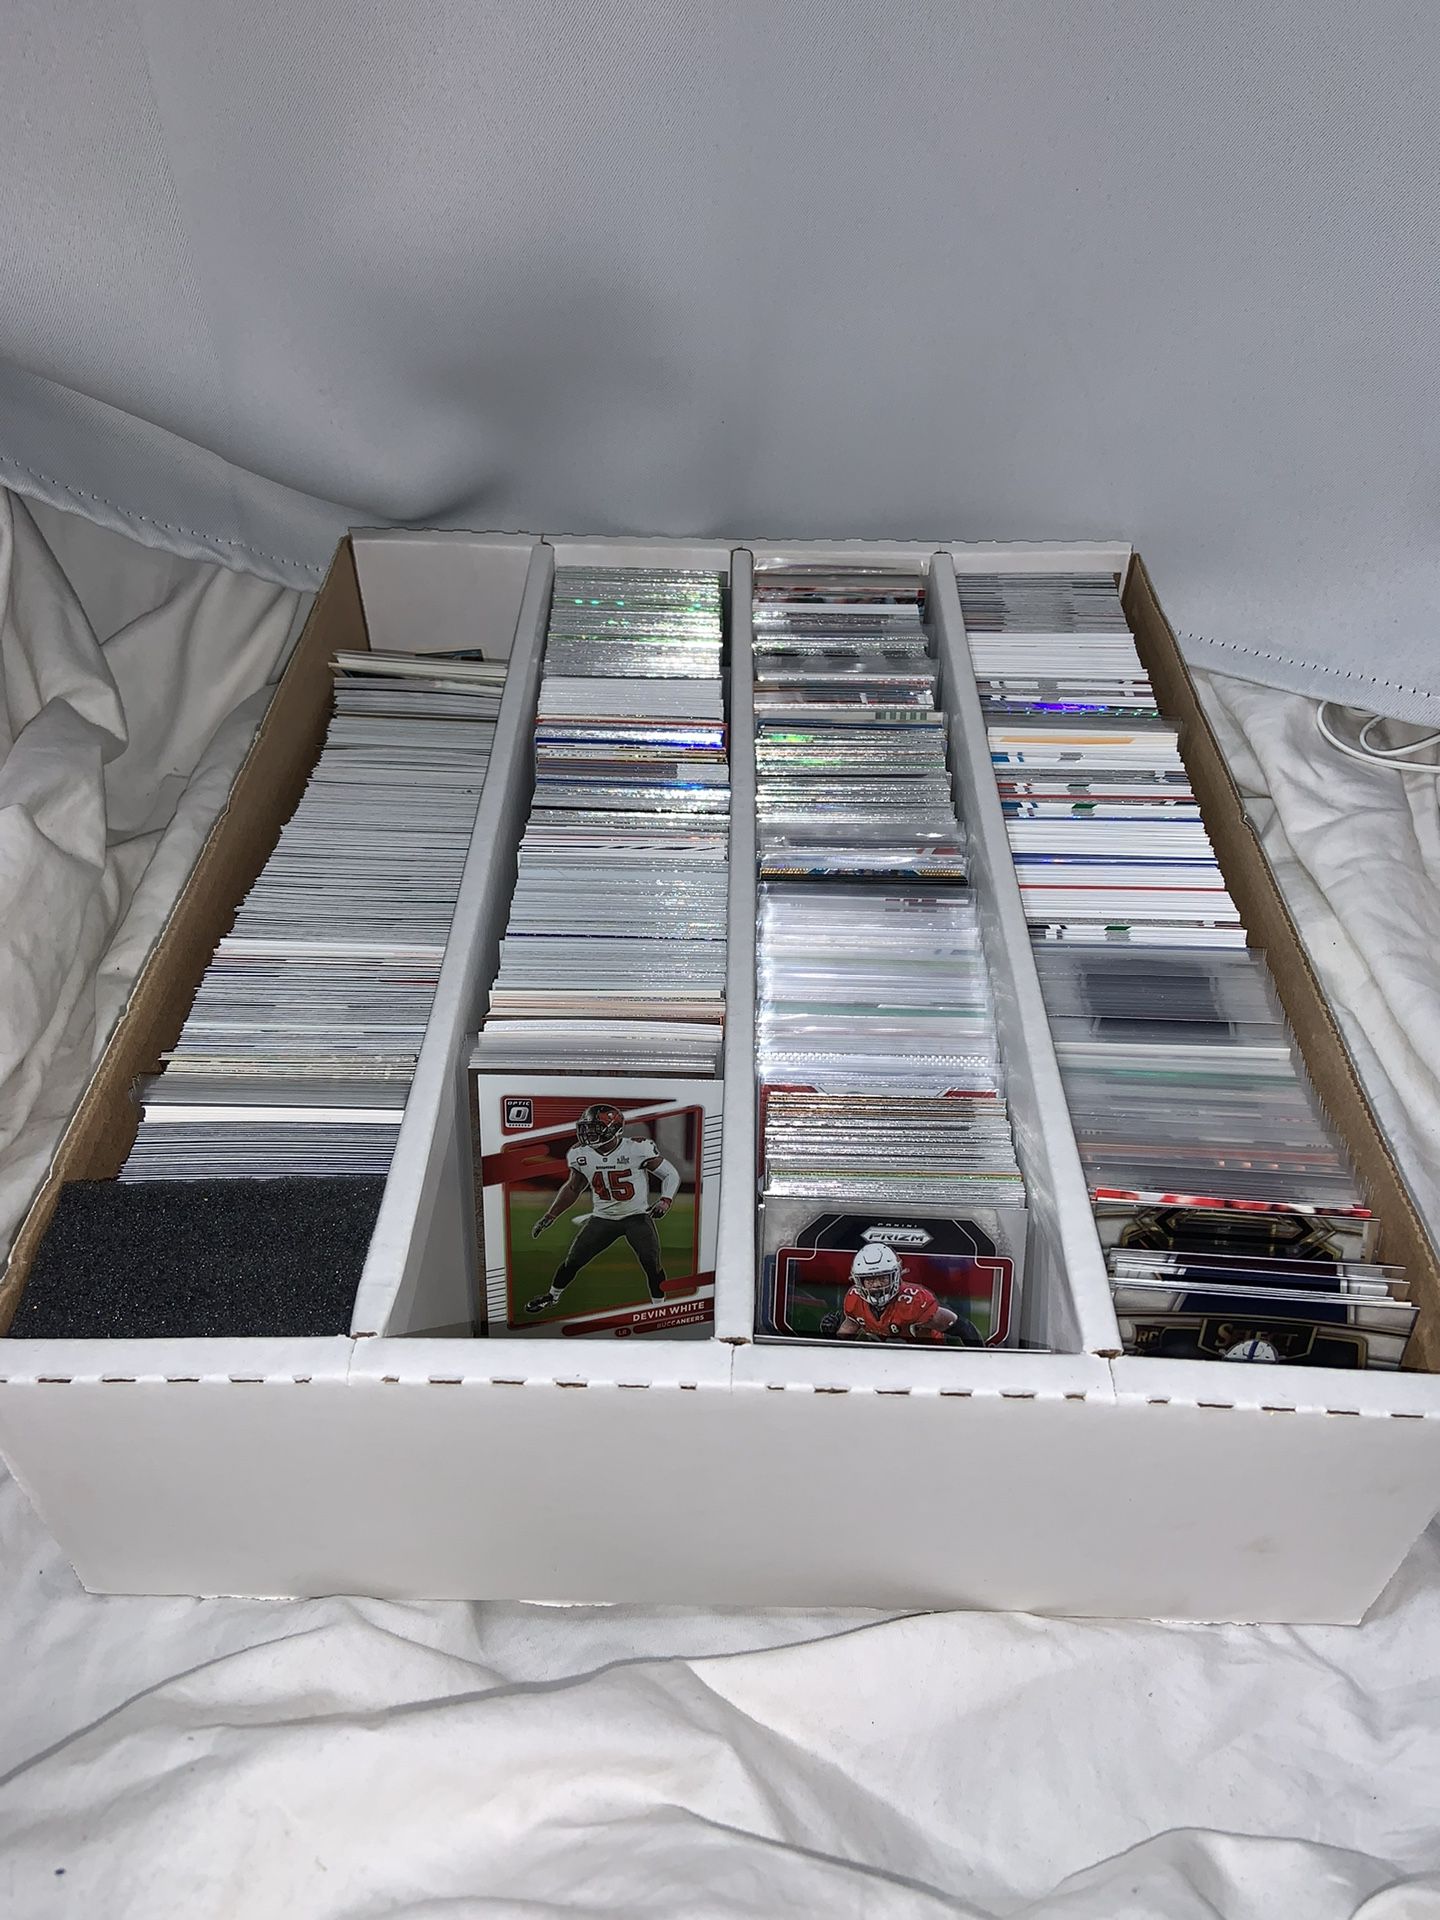 300ct  Box Full Of random football cards 90s-23s